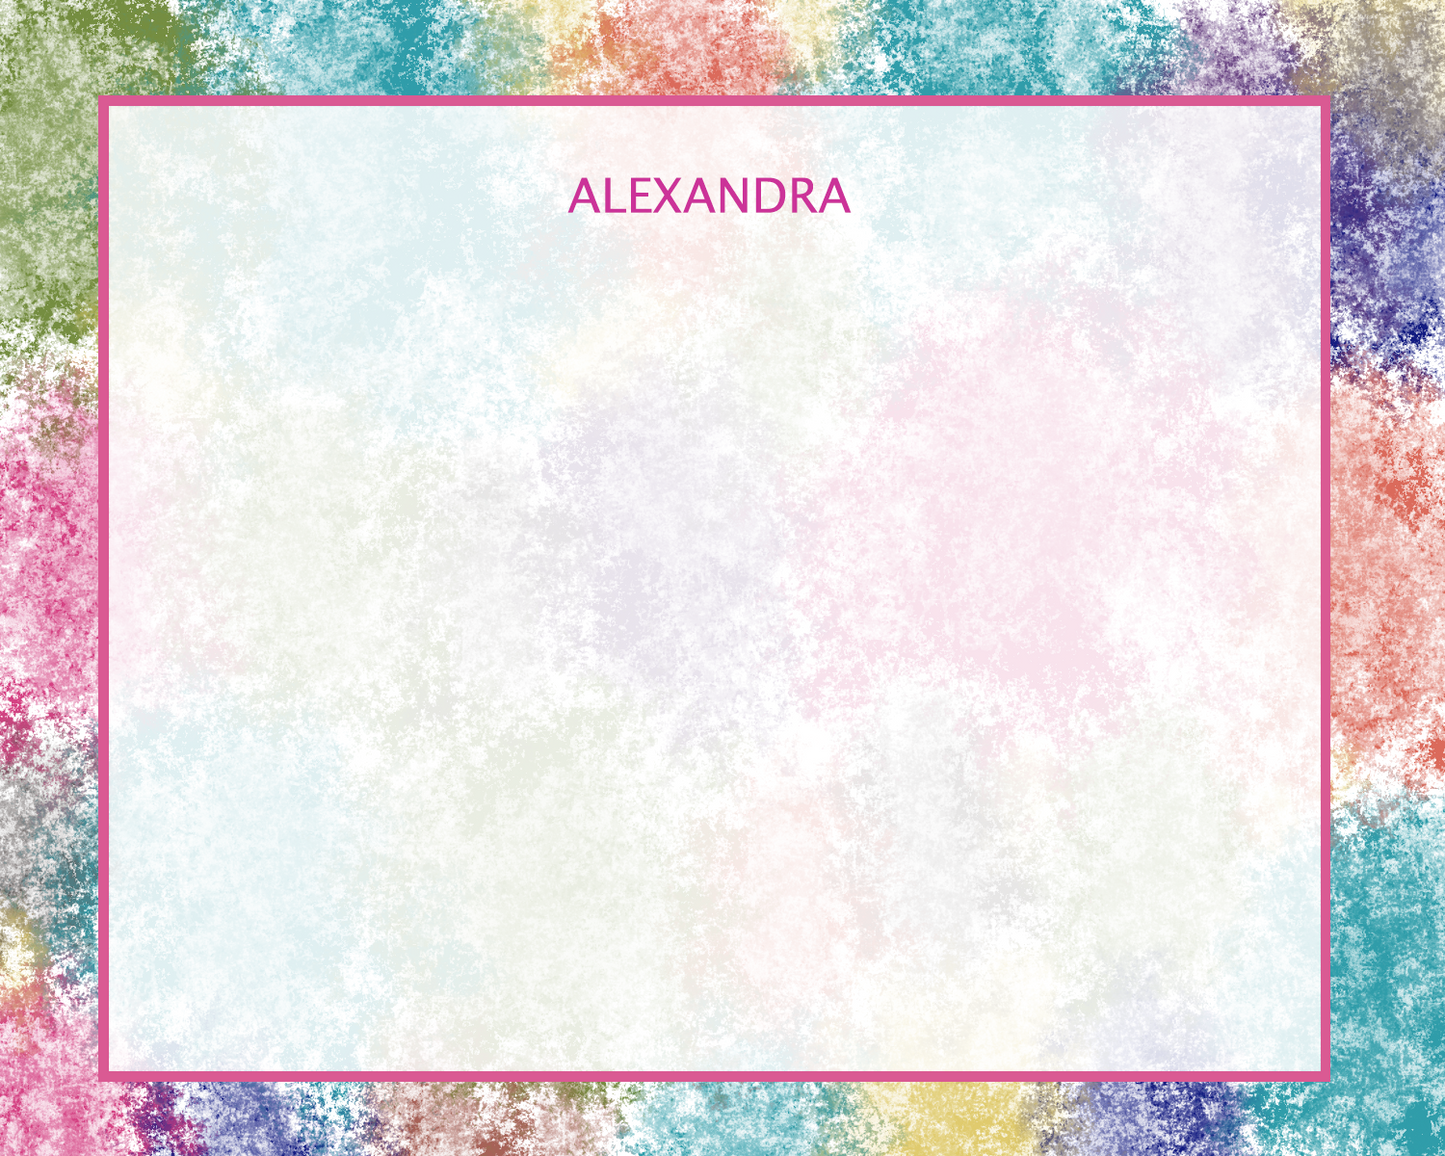 Alexandra Personalized Stationery Set